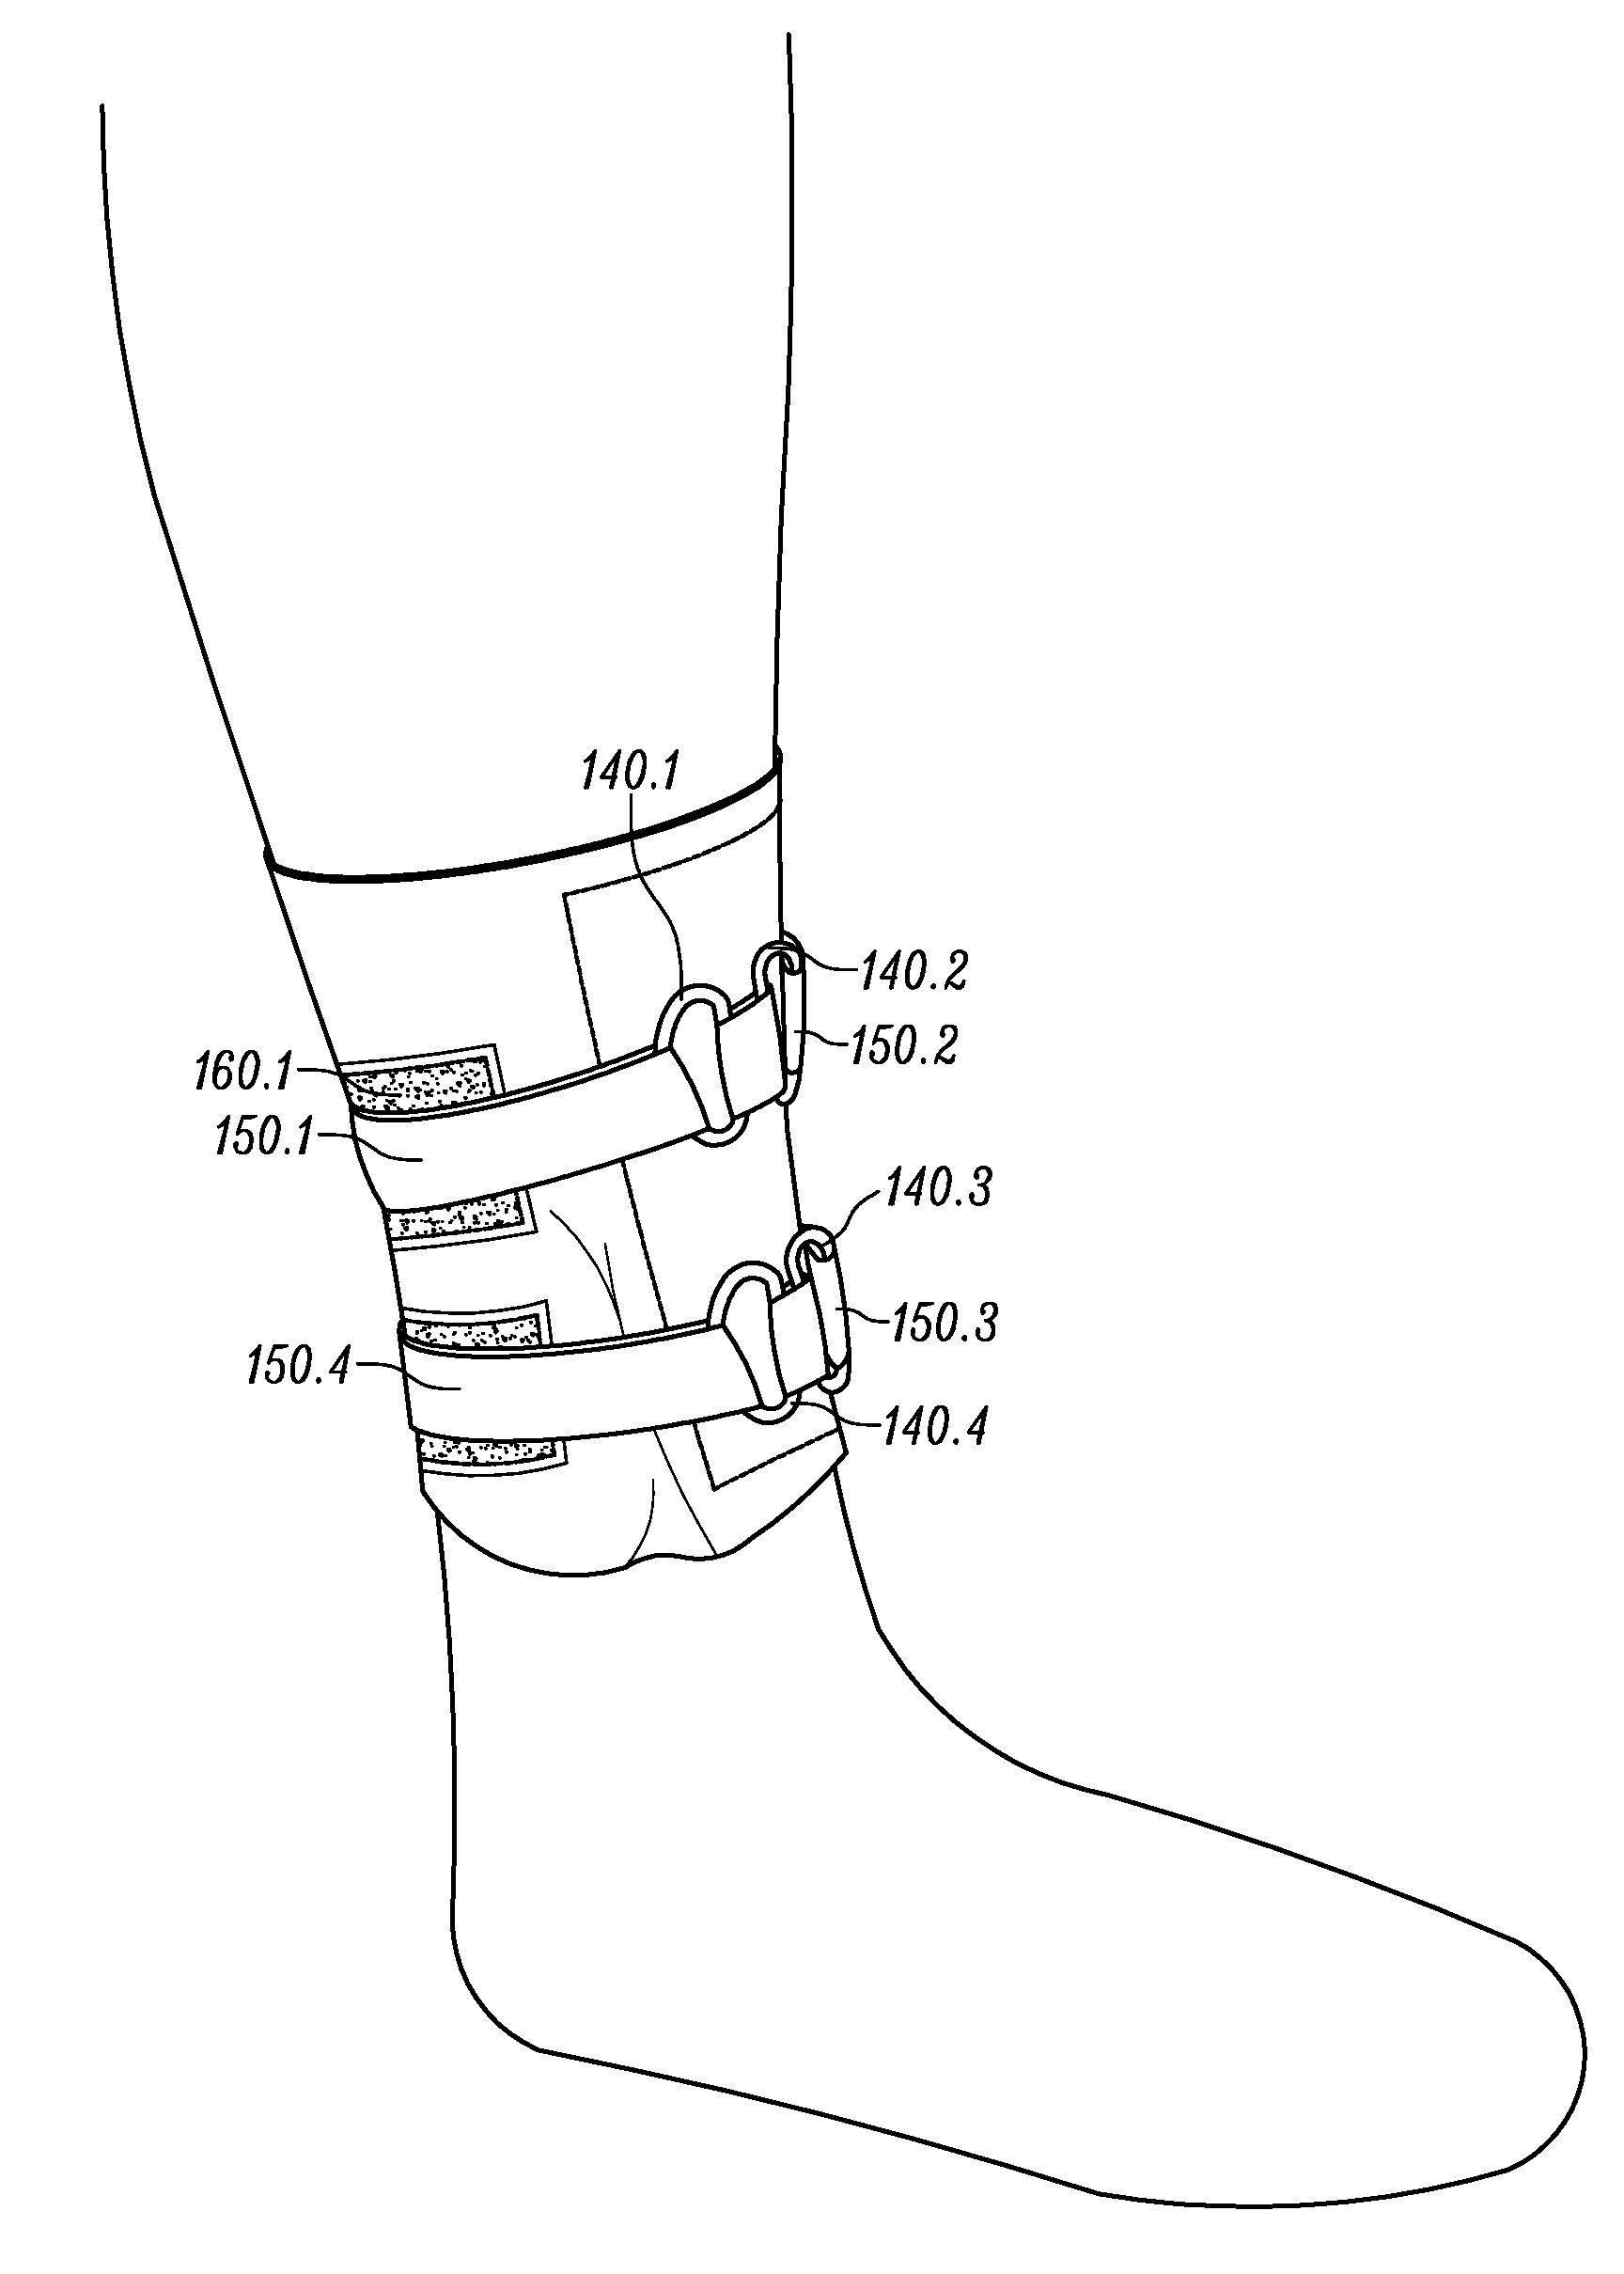 Orthopedic brace and method of use